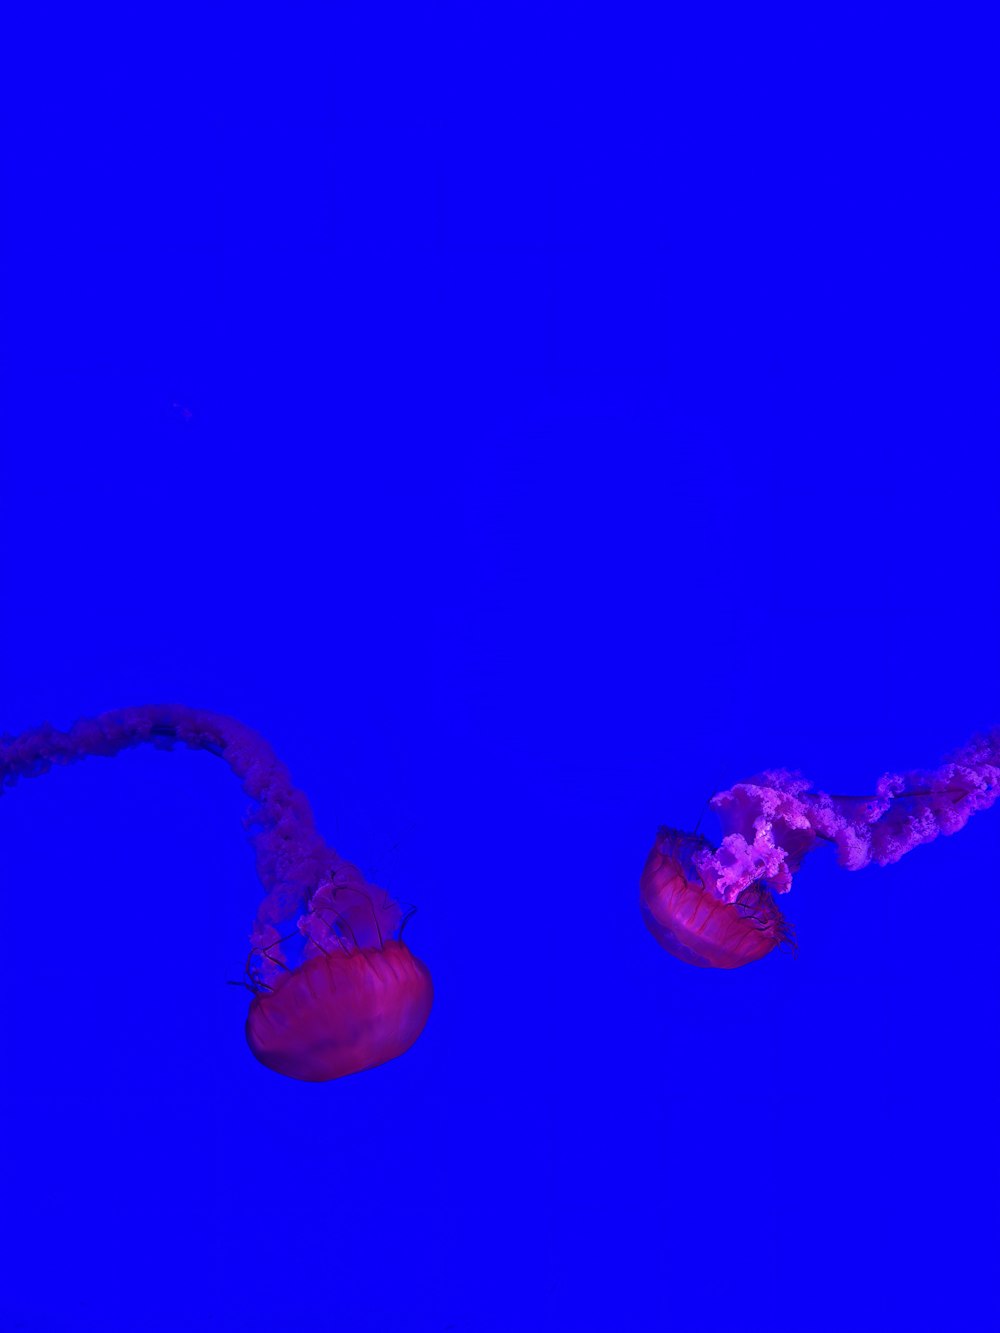 Deux méduses nageant dans un océan bleu profond